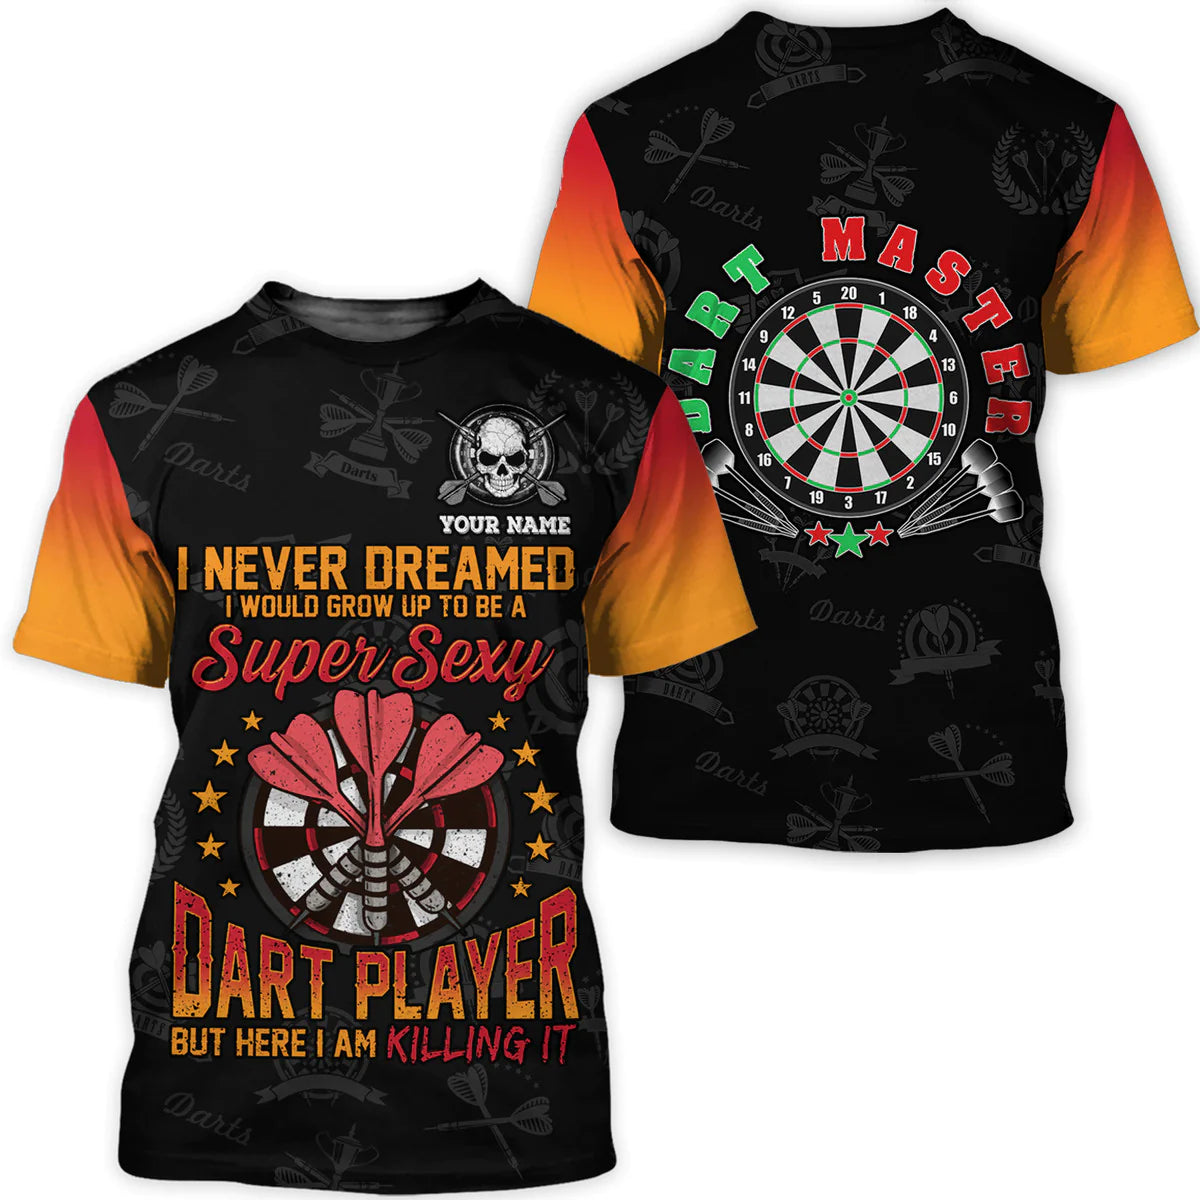 I never dreamed super sexy Dart player, Darts Team shirt, Birthday Gift For Dart Lover – DT044